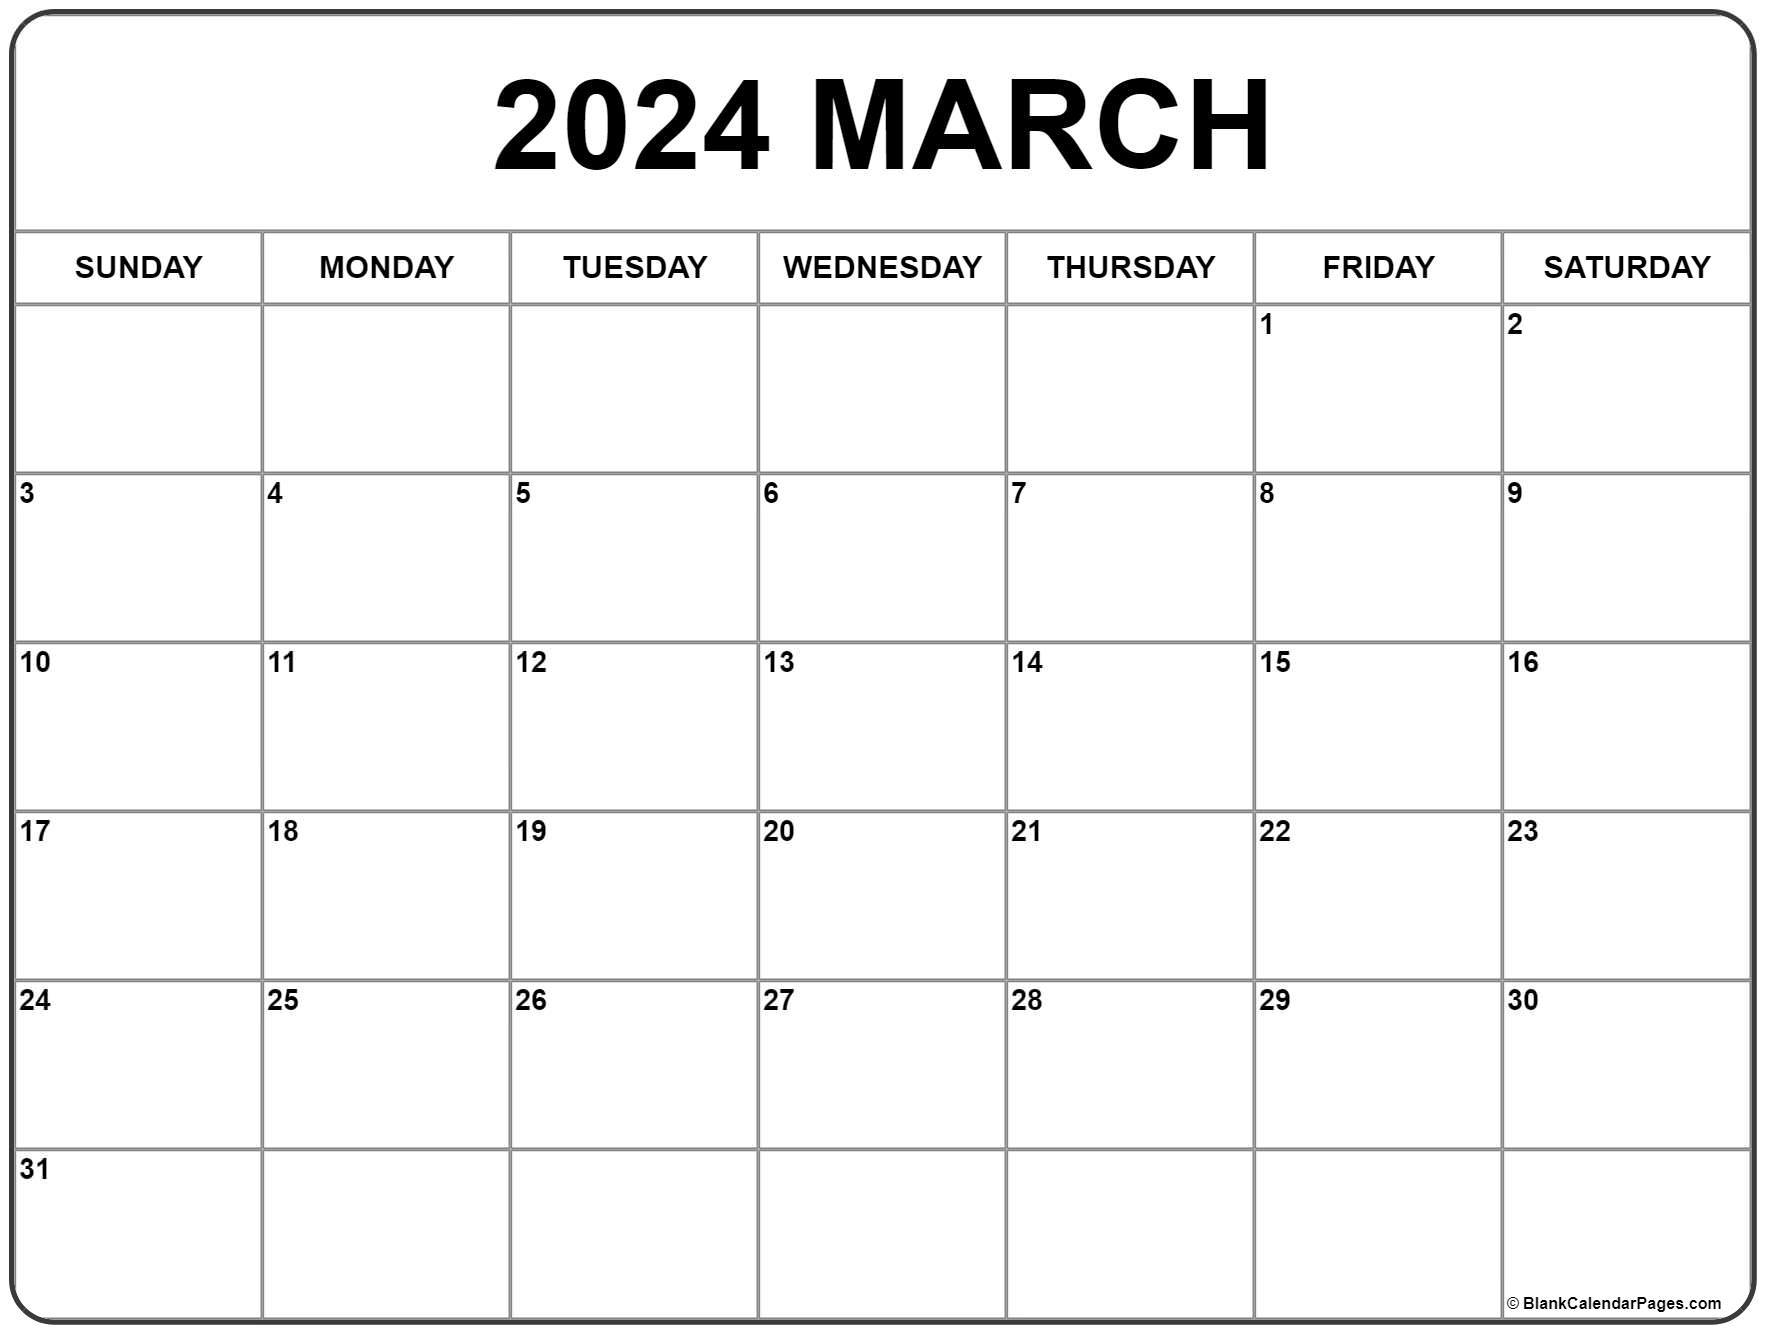 March 2024 Calendar | Free Printable Calendar for Printable Monthly Calendar 2024 March